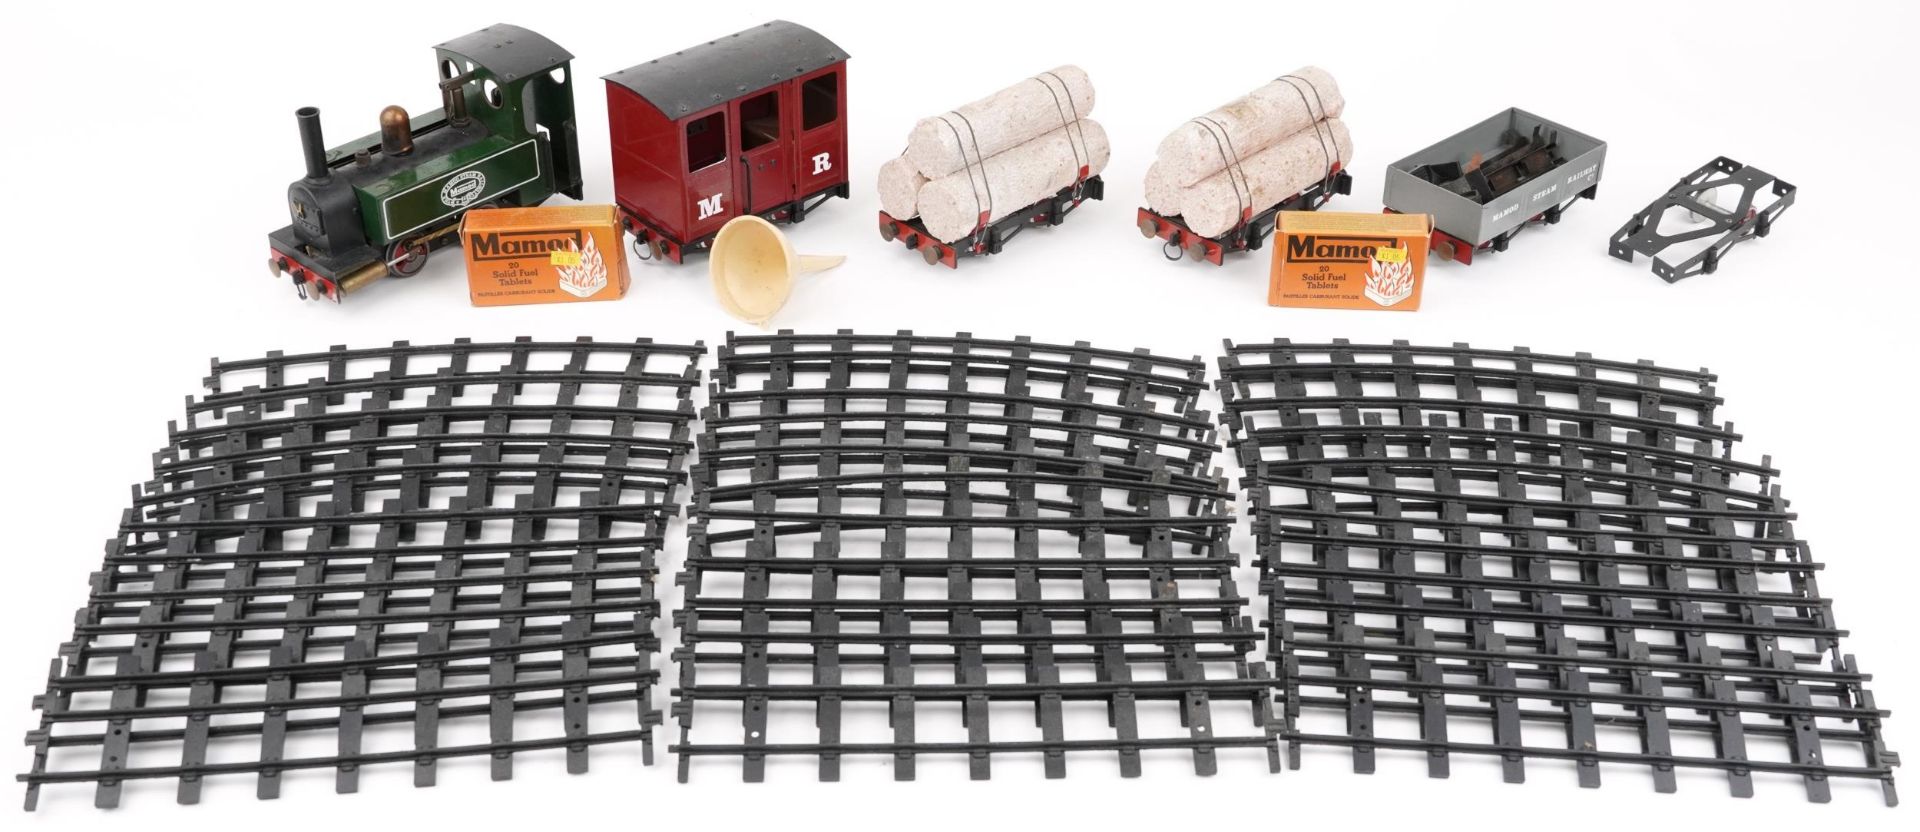 Mamod tinplate model railway including locomotive with tender